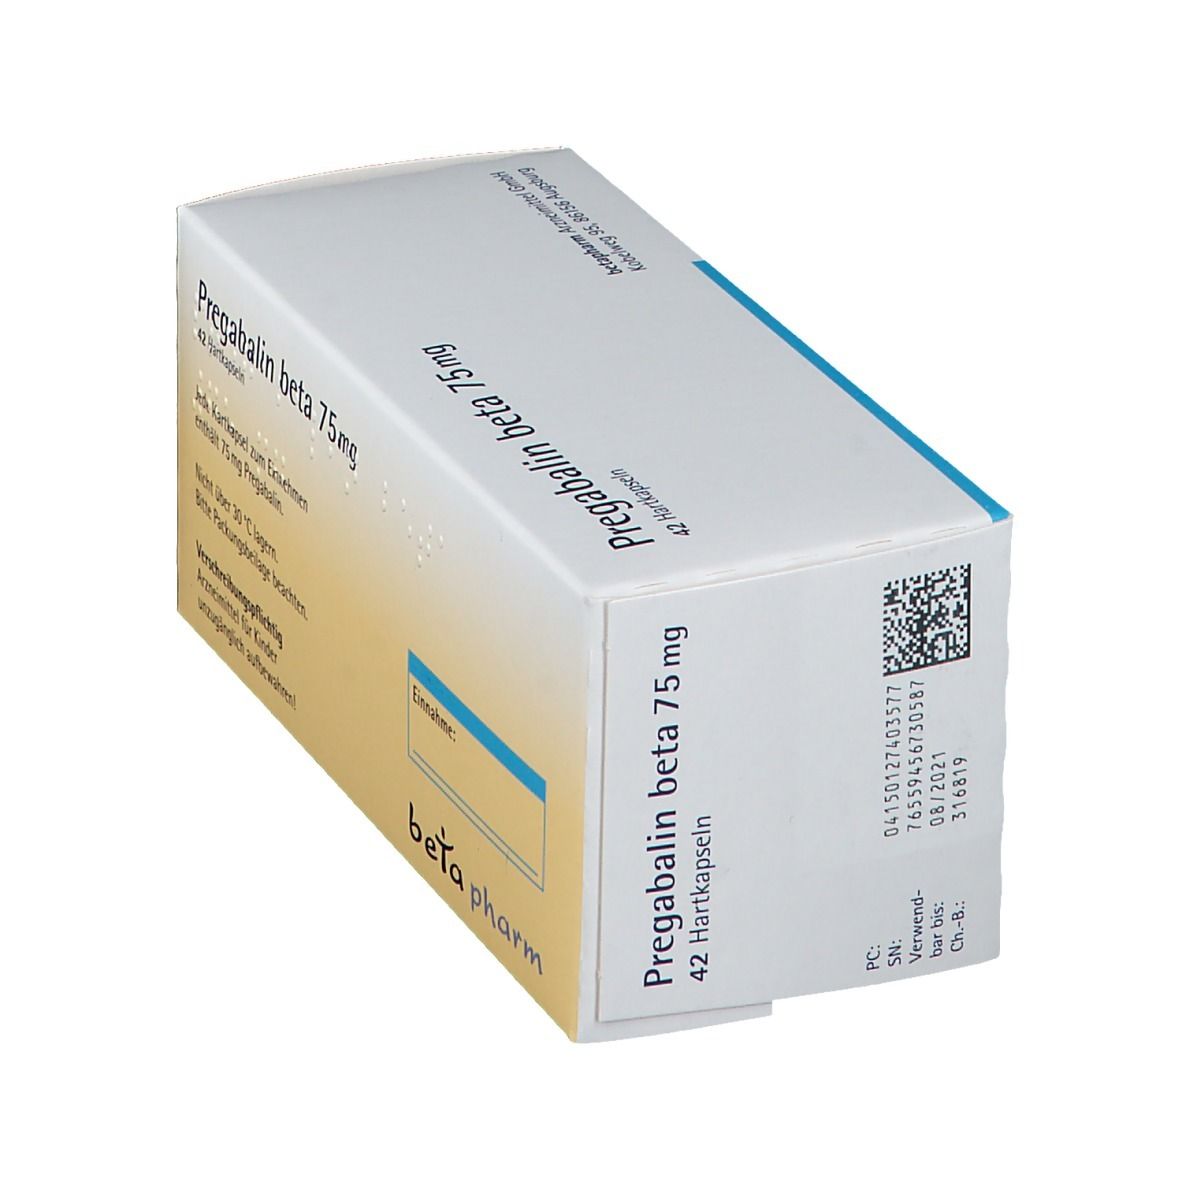 Pregabalin beta 75 mg